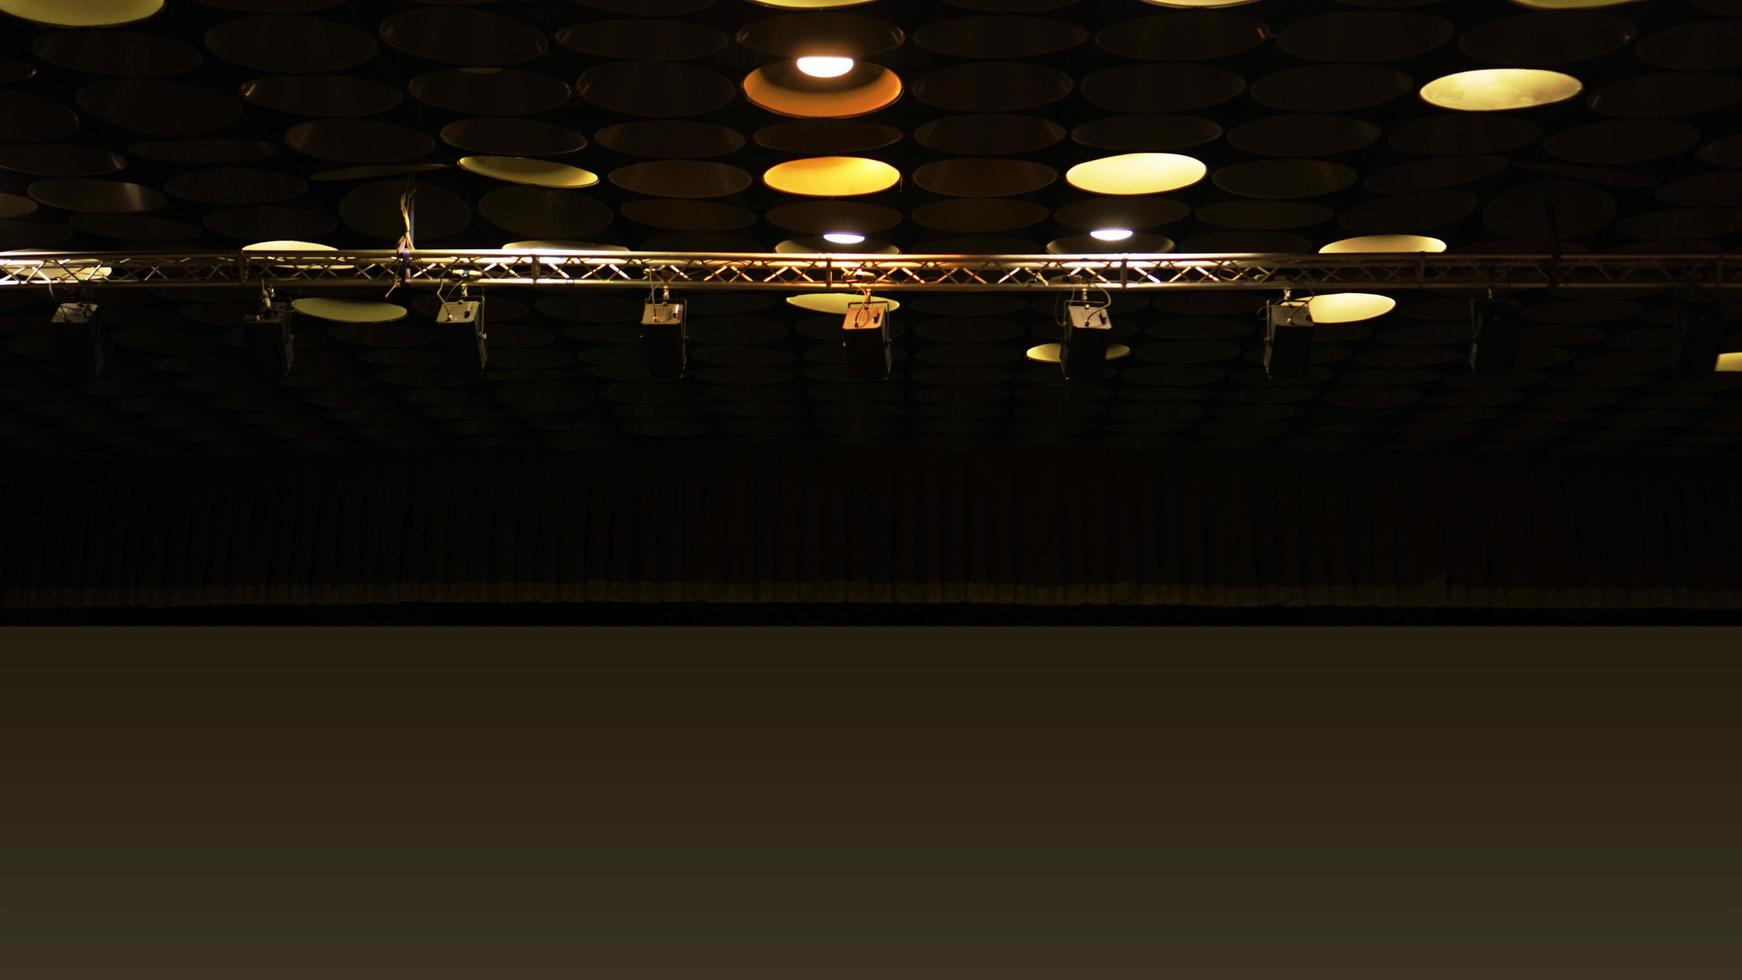 spot lights na sala do cinema no teto foto